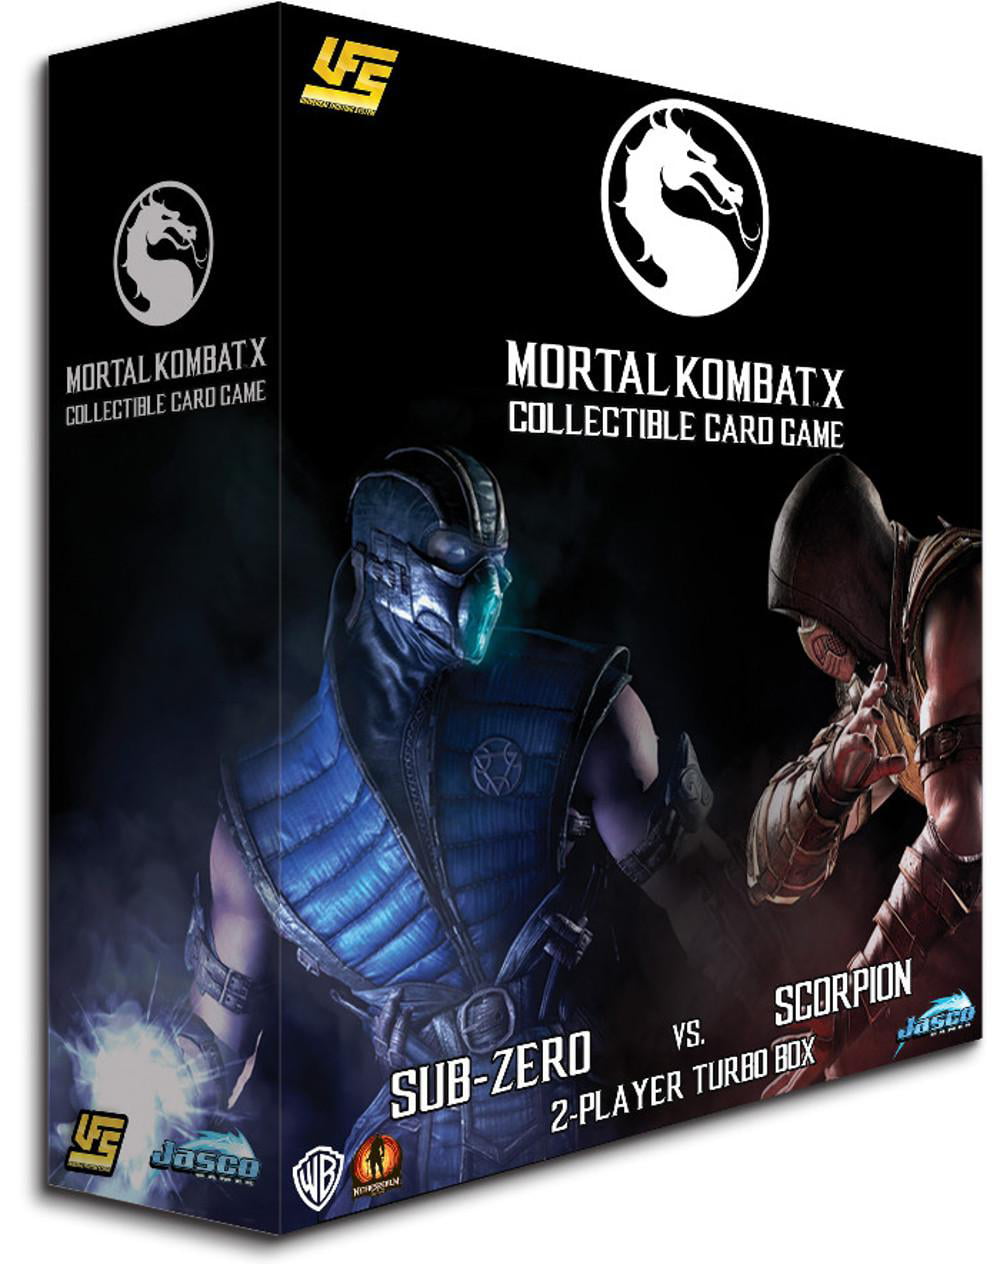 BAIO Mortal Kombat Sticker Box (100 Packs) - Sports Cards